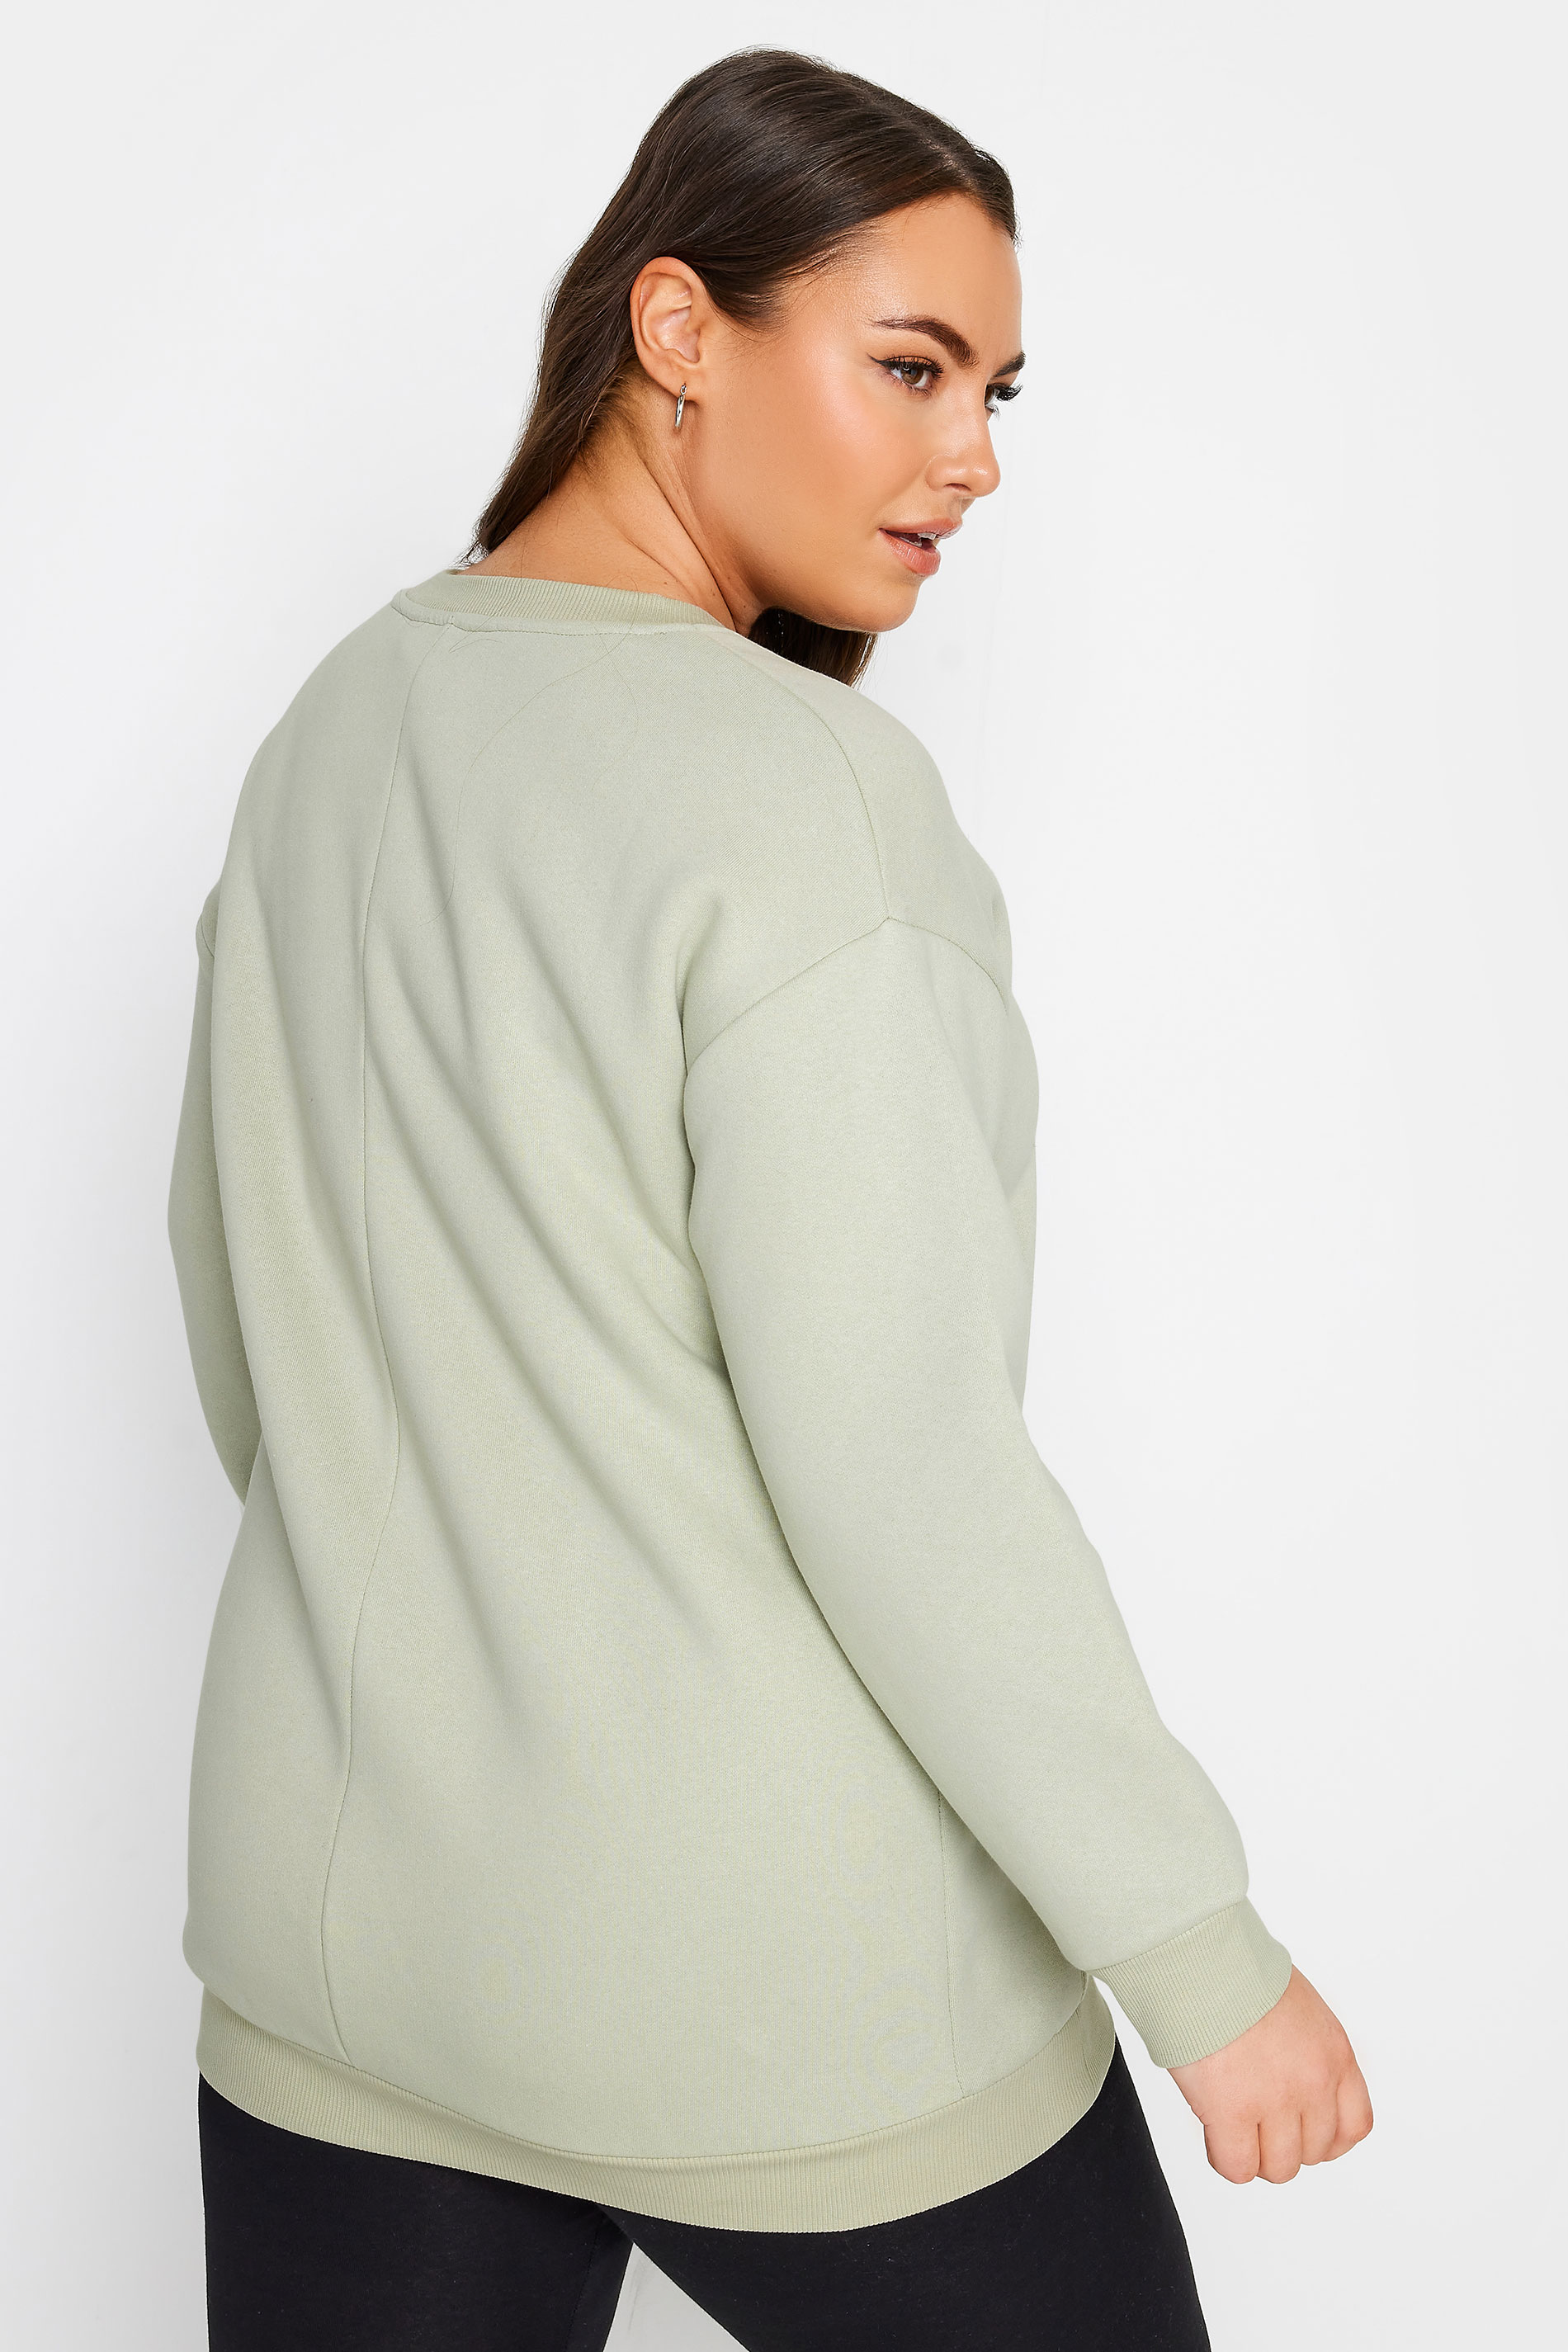 YOURS Curve Plus Size Light Grey 'New York' Slogan Sweatshirt | Yours Clothing  3